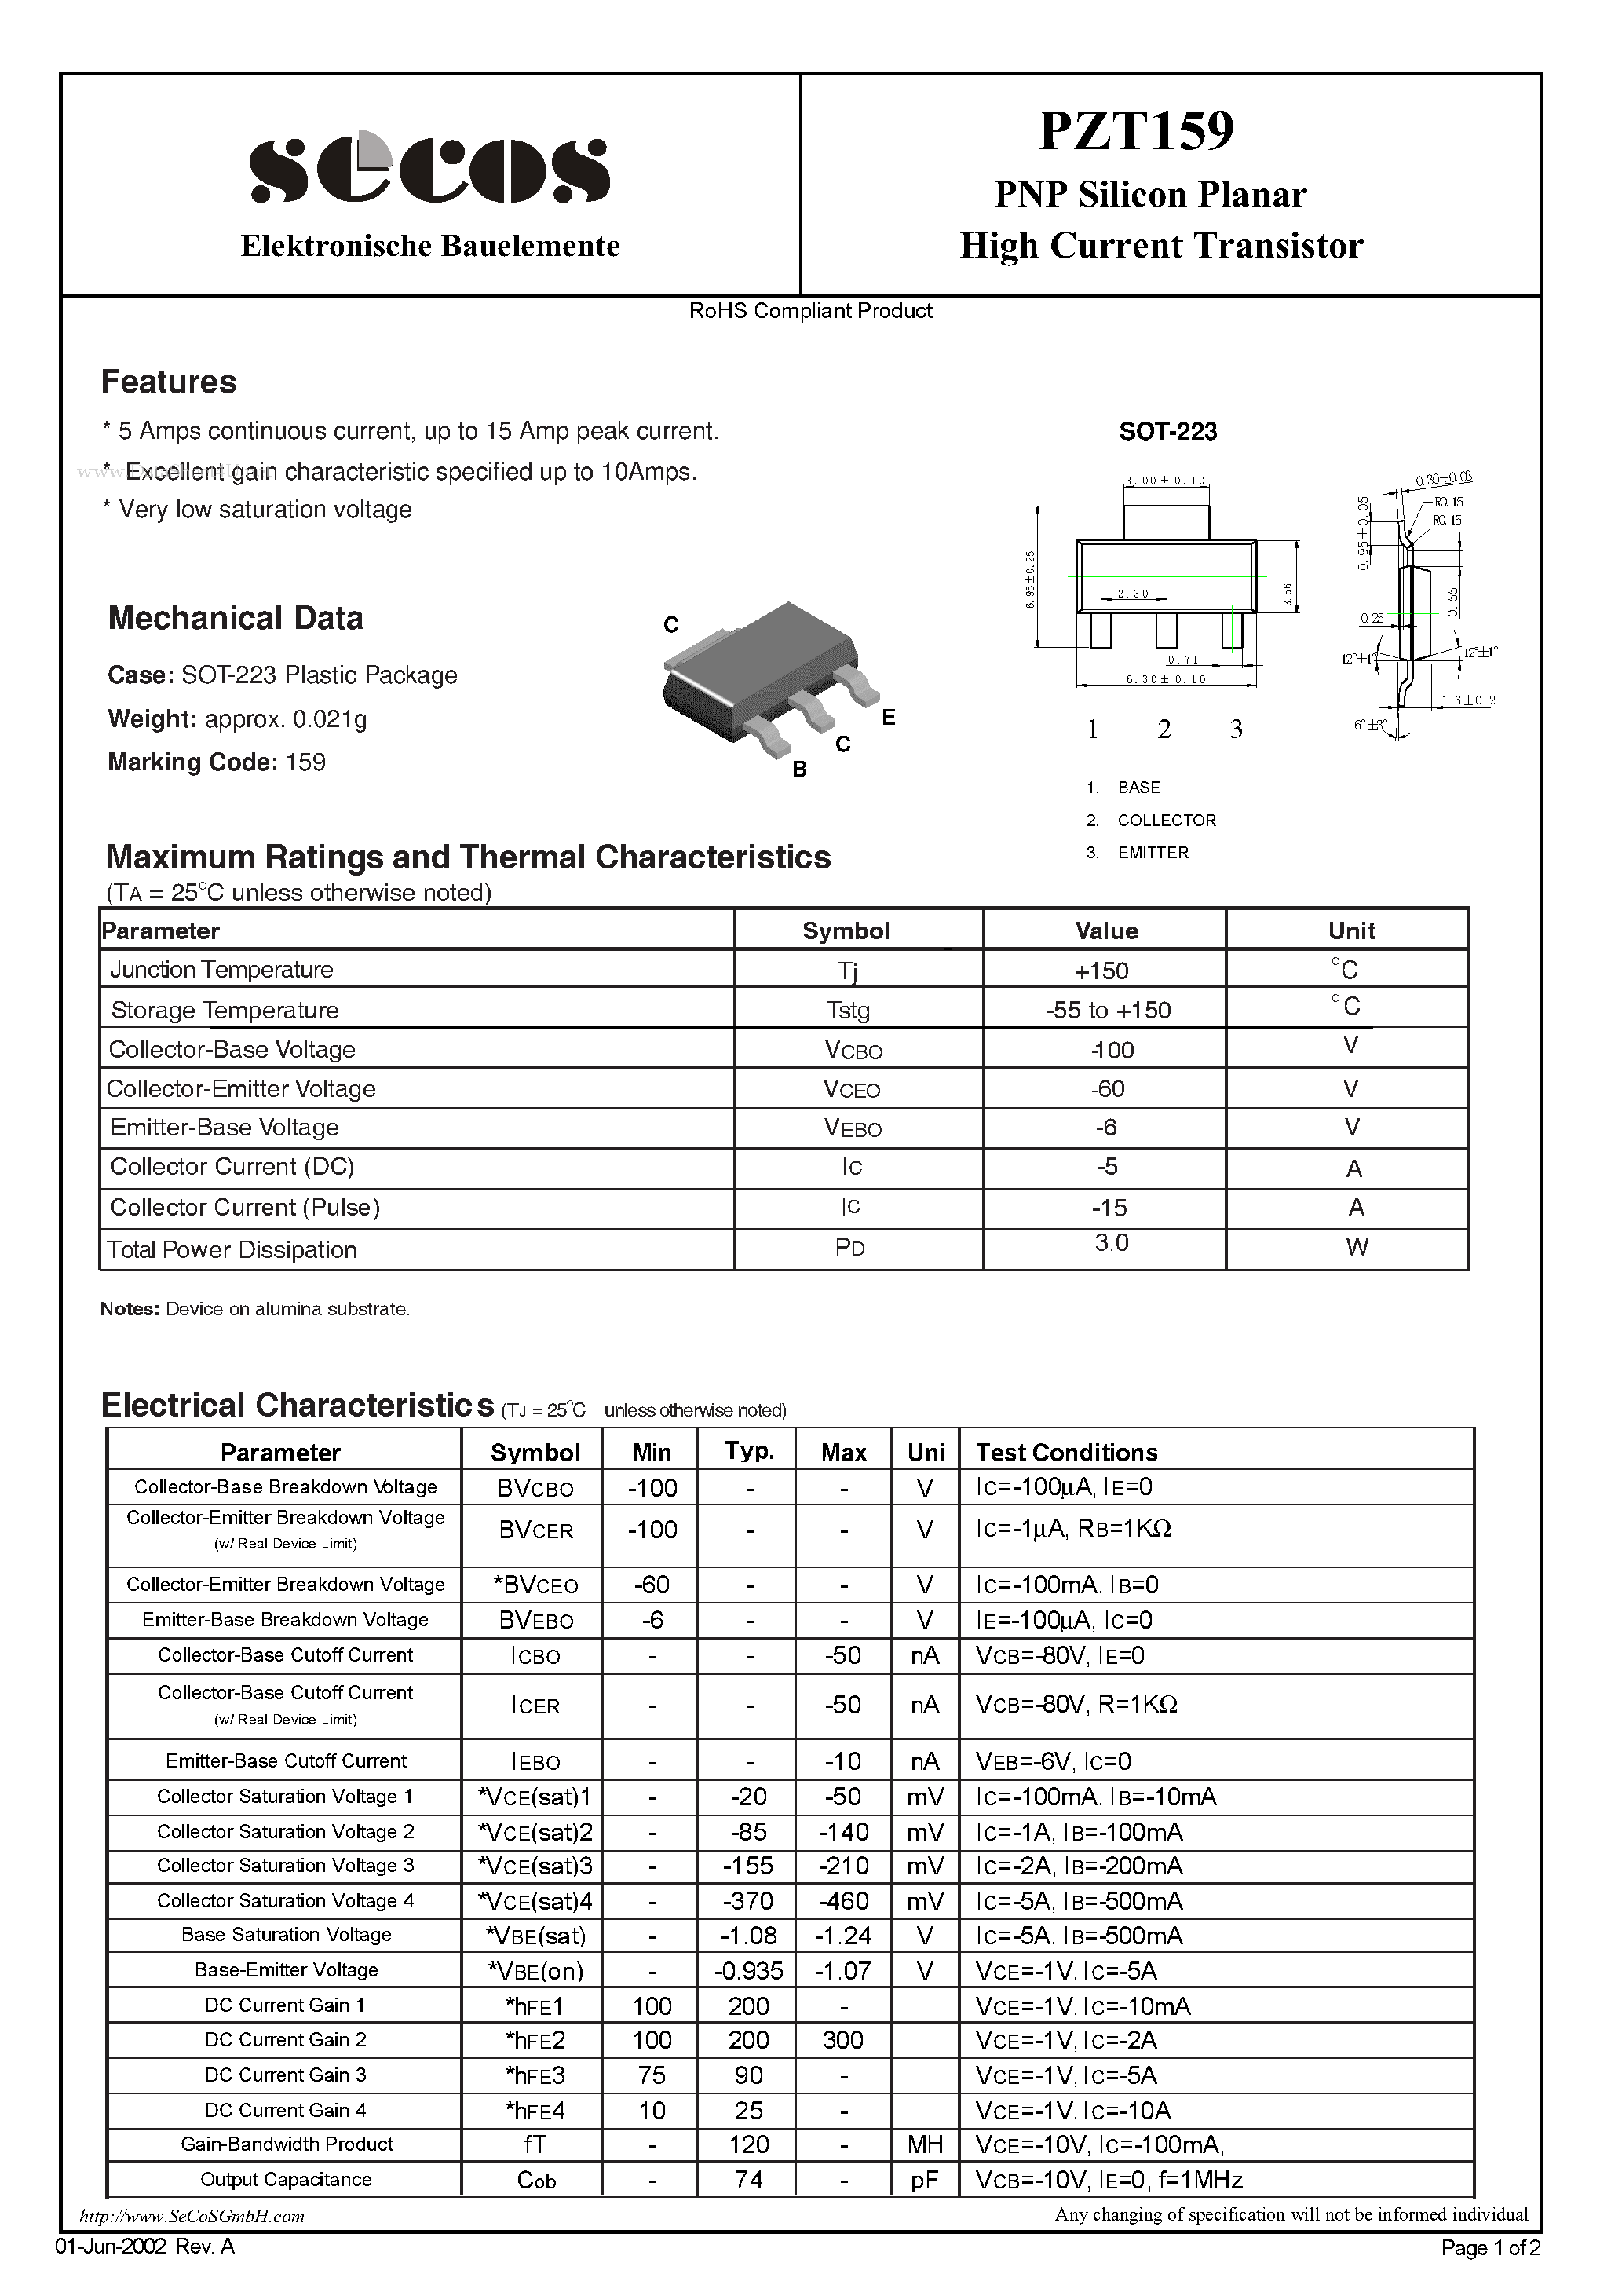 Datasheet PZT159 - High Current Transistor page 1